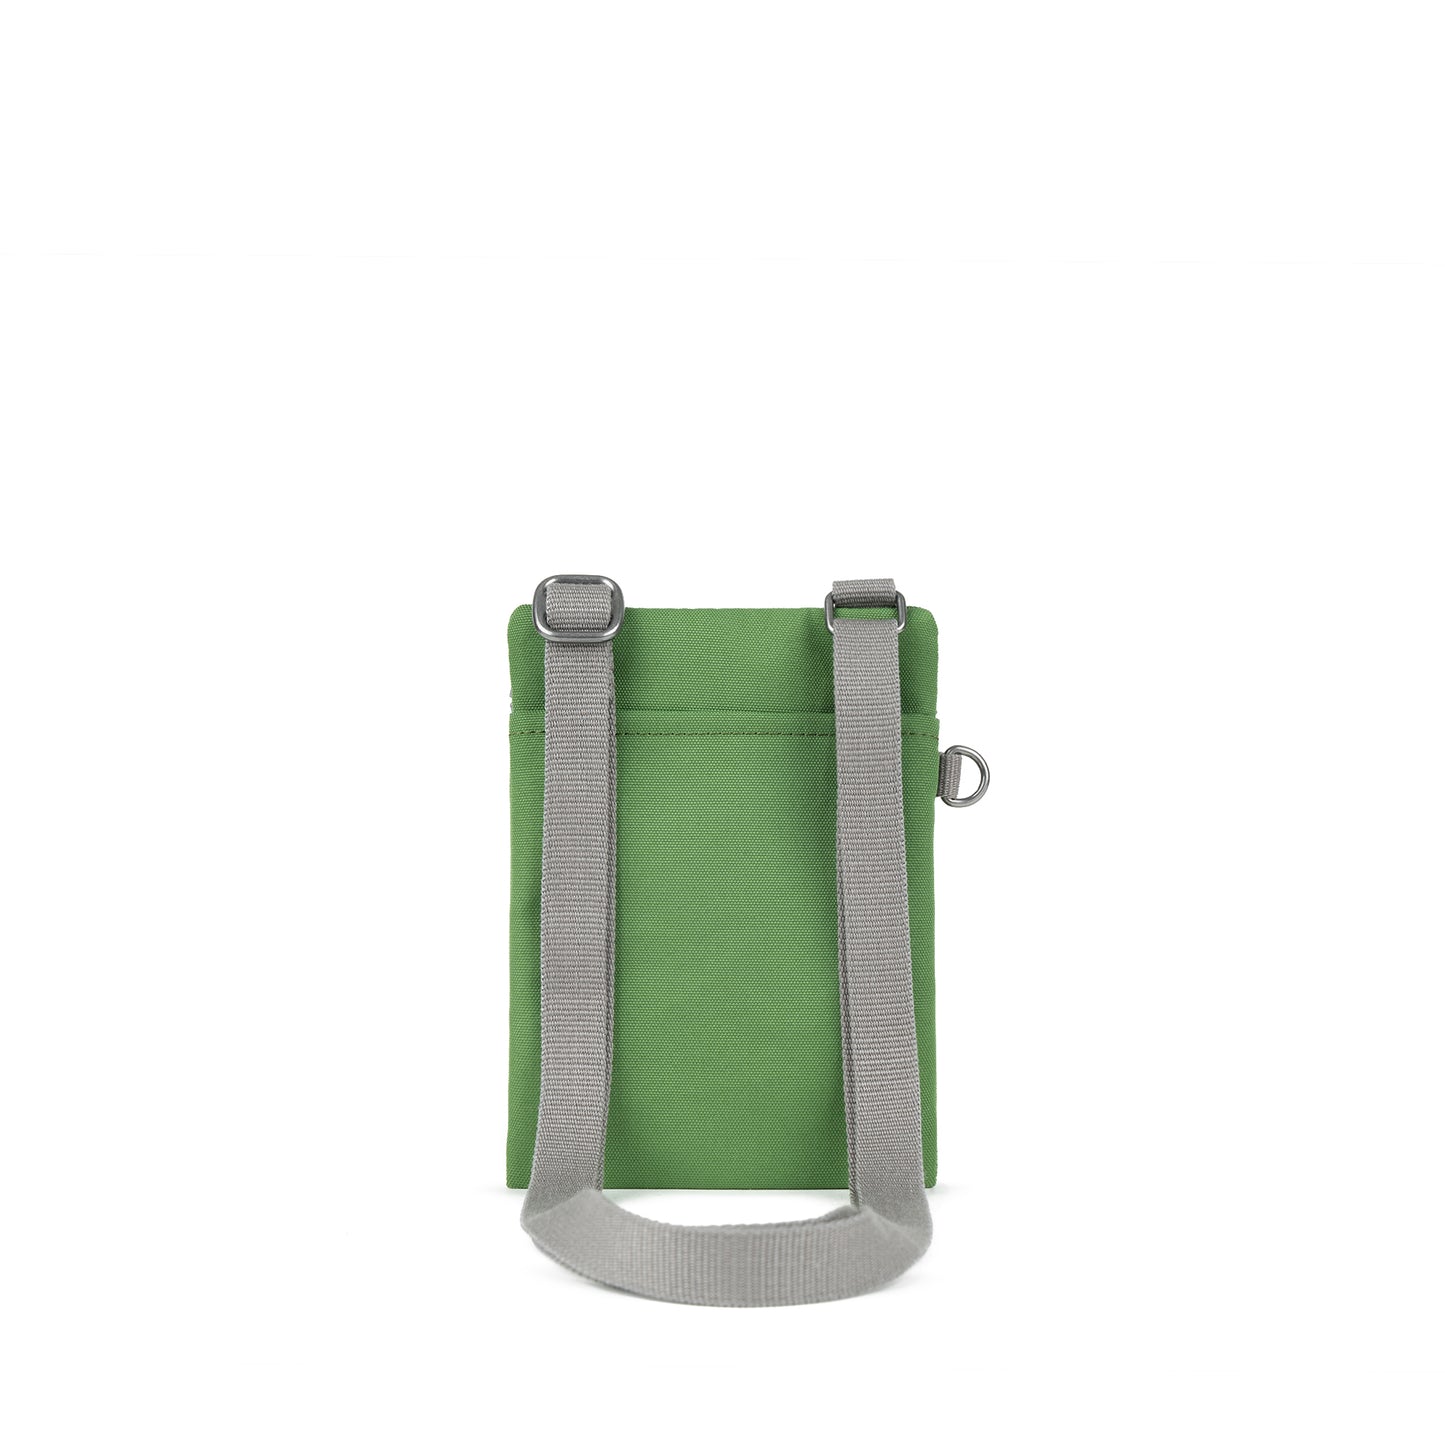 Roka London Chelsea Crossbody Phone Bag, Foliage (Sustainable Canvas)